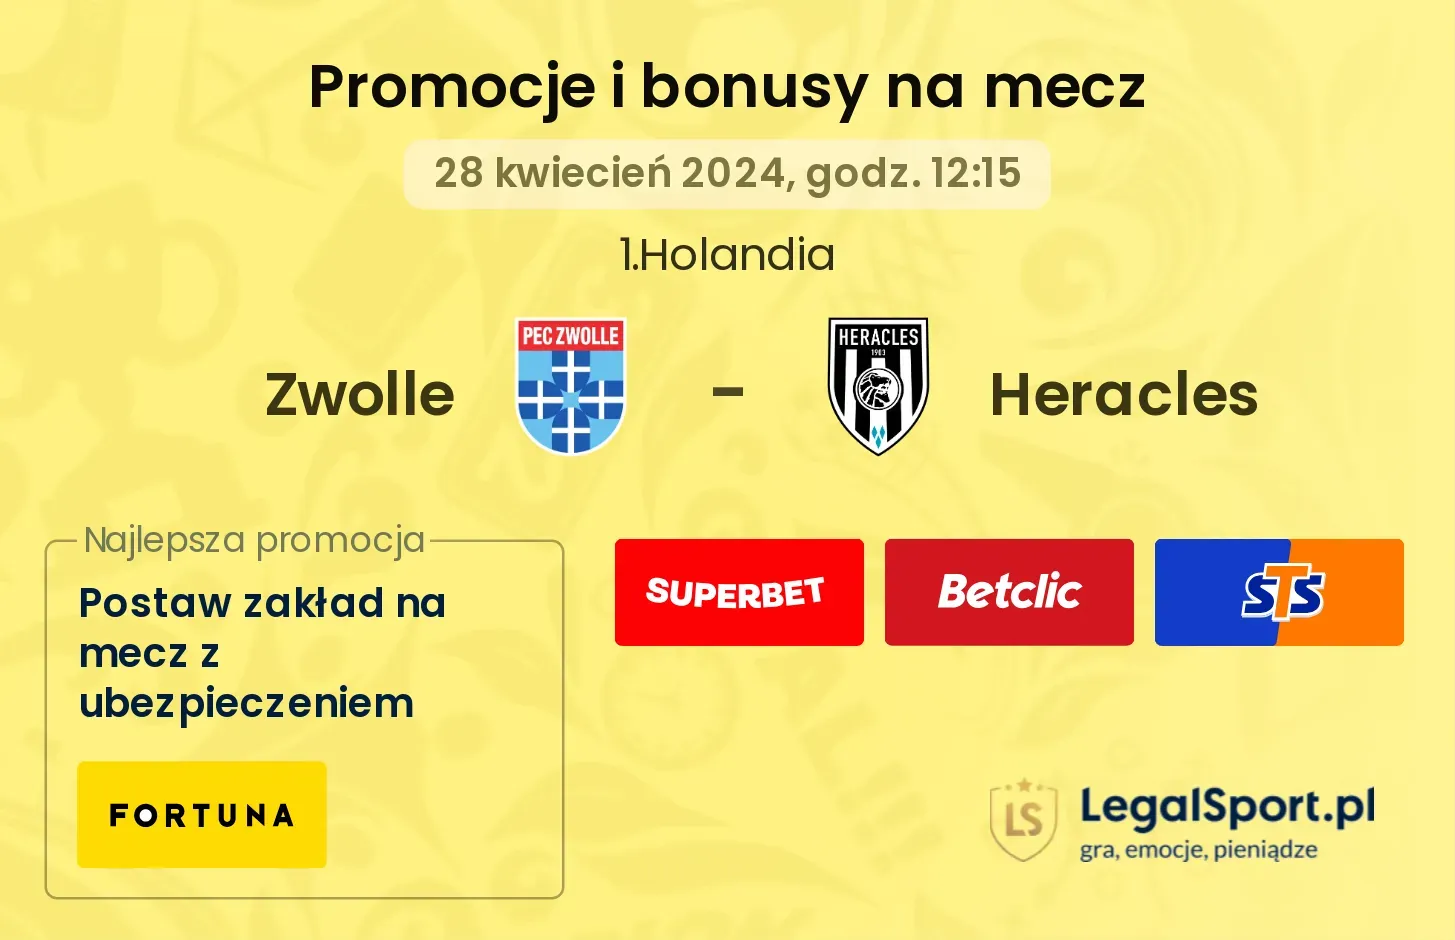 Zwolle - Heracles promocje bonusy na mecz